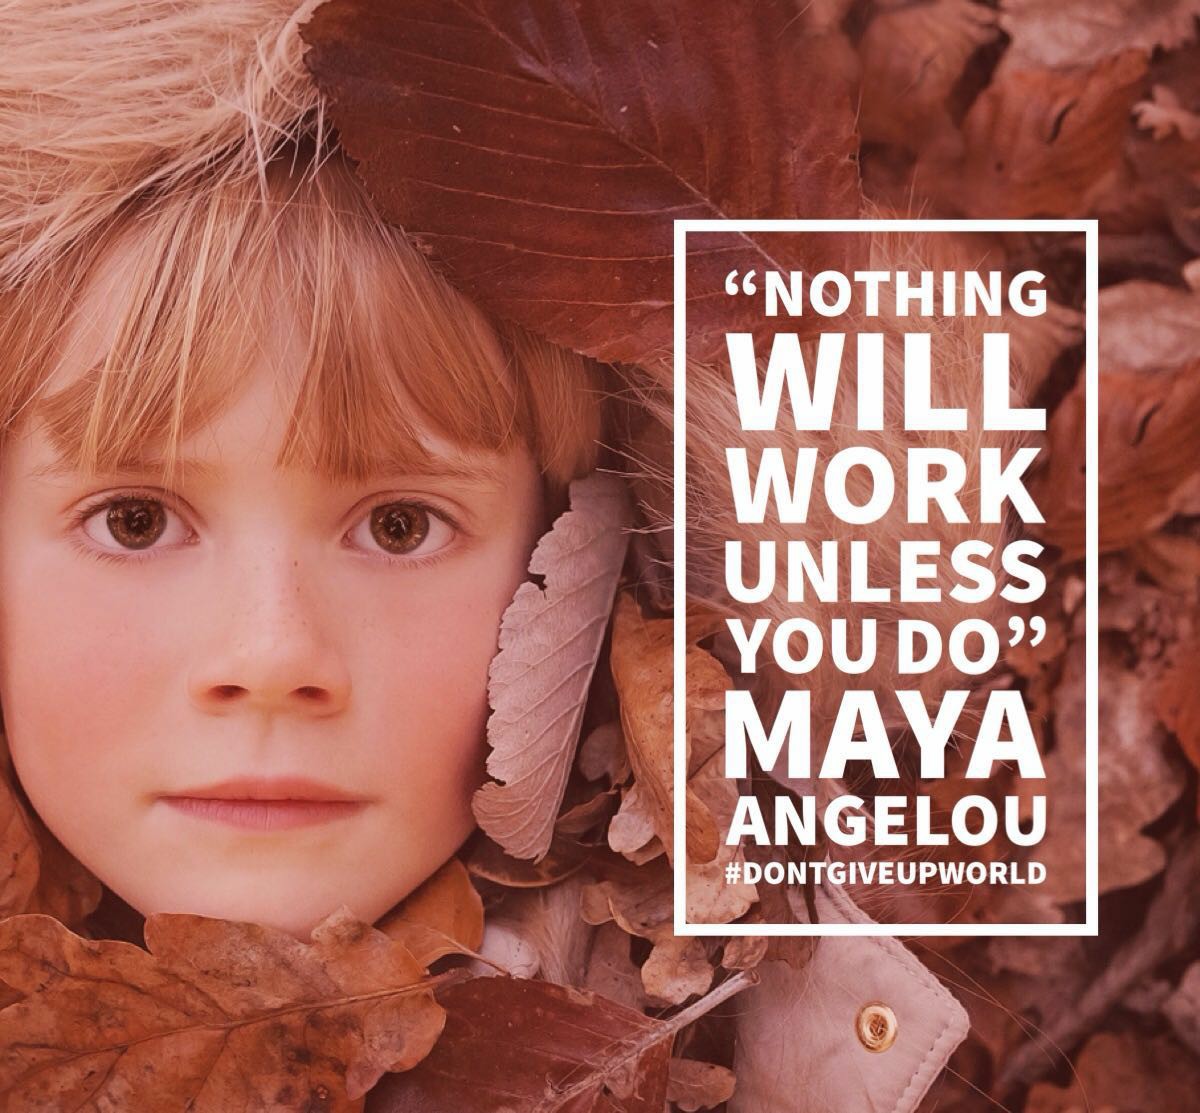 Maya Angelou quote@dontgiveup